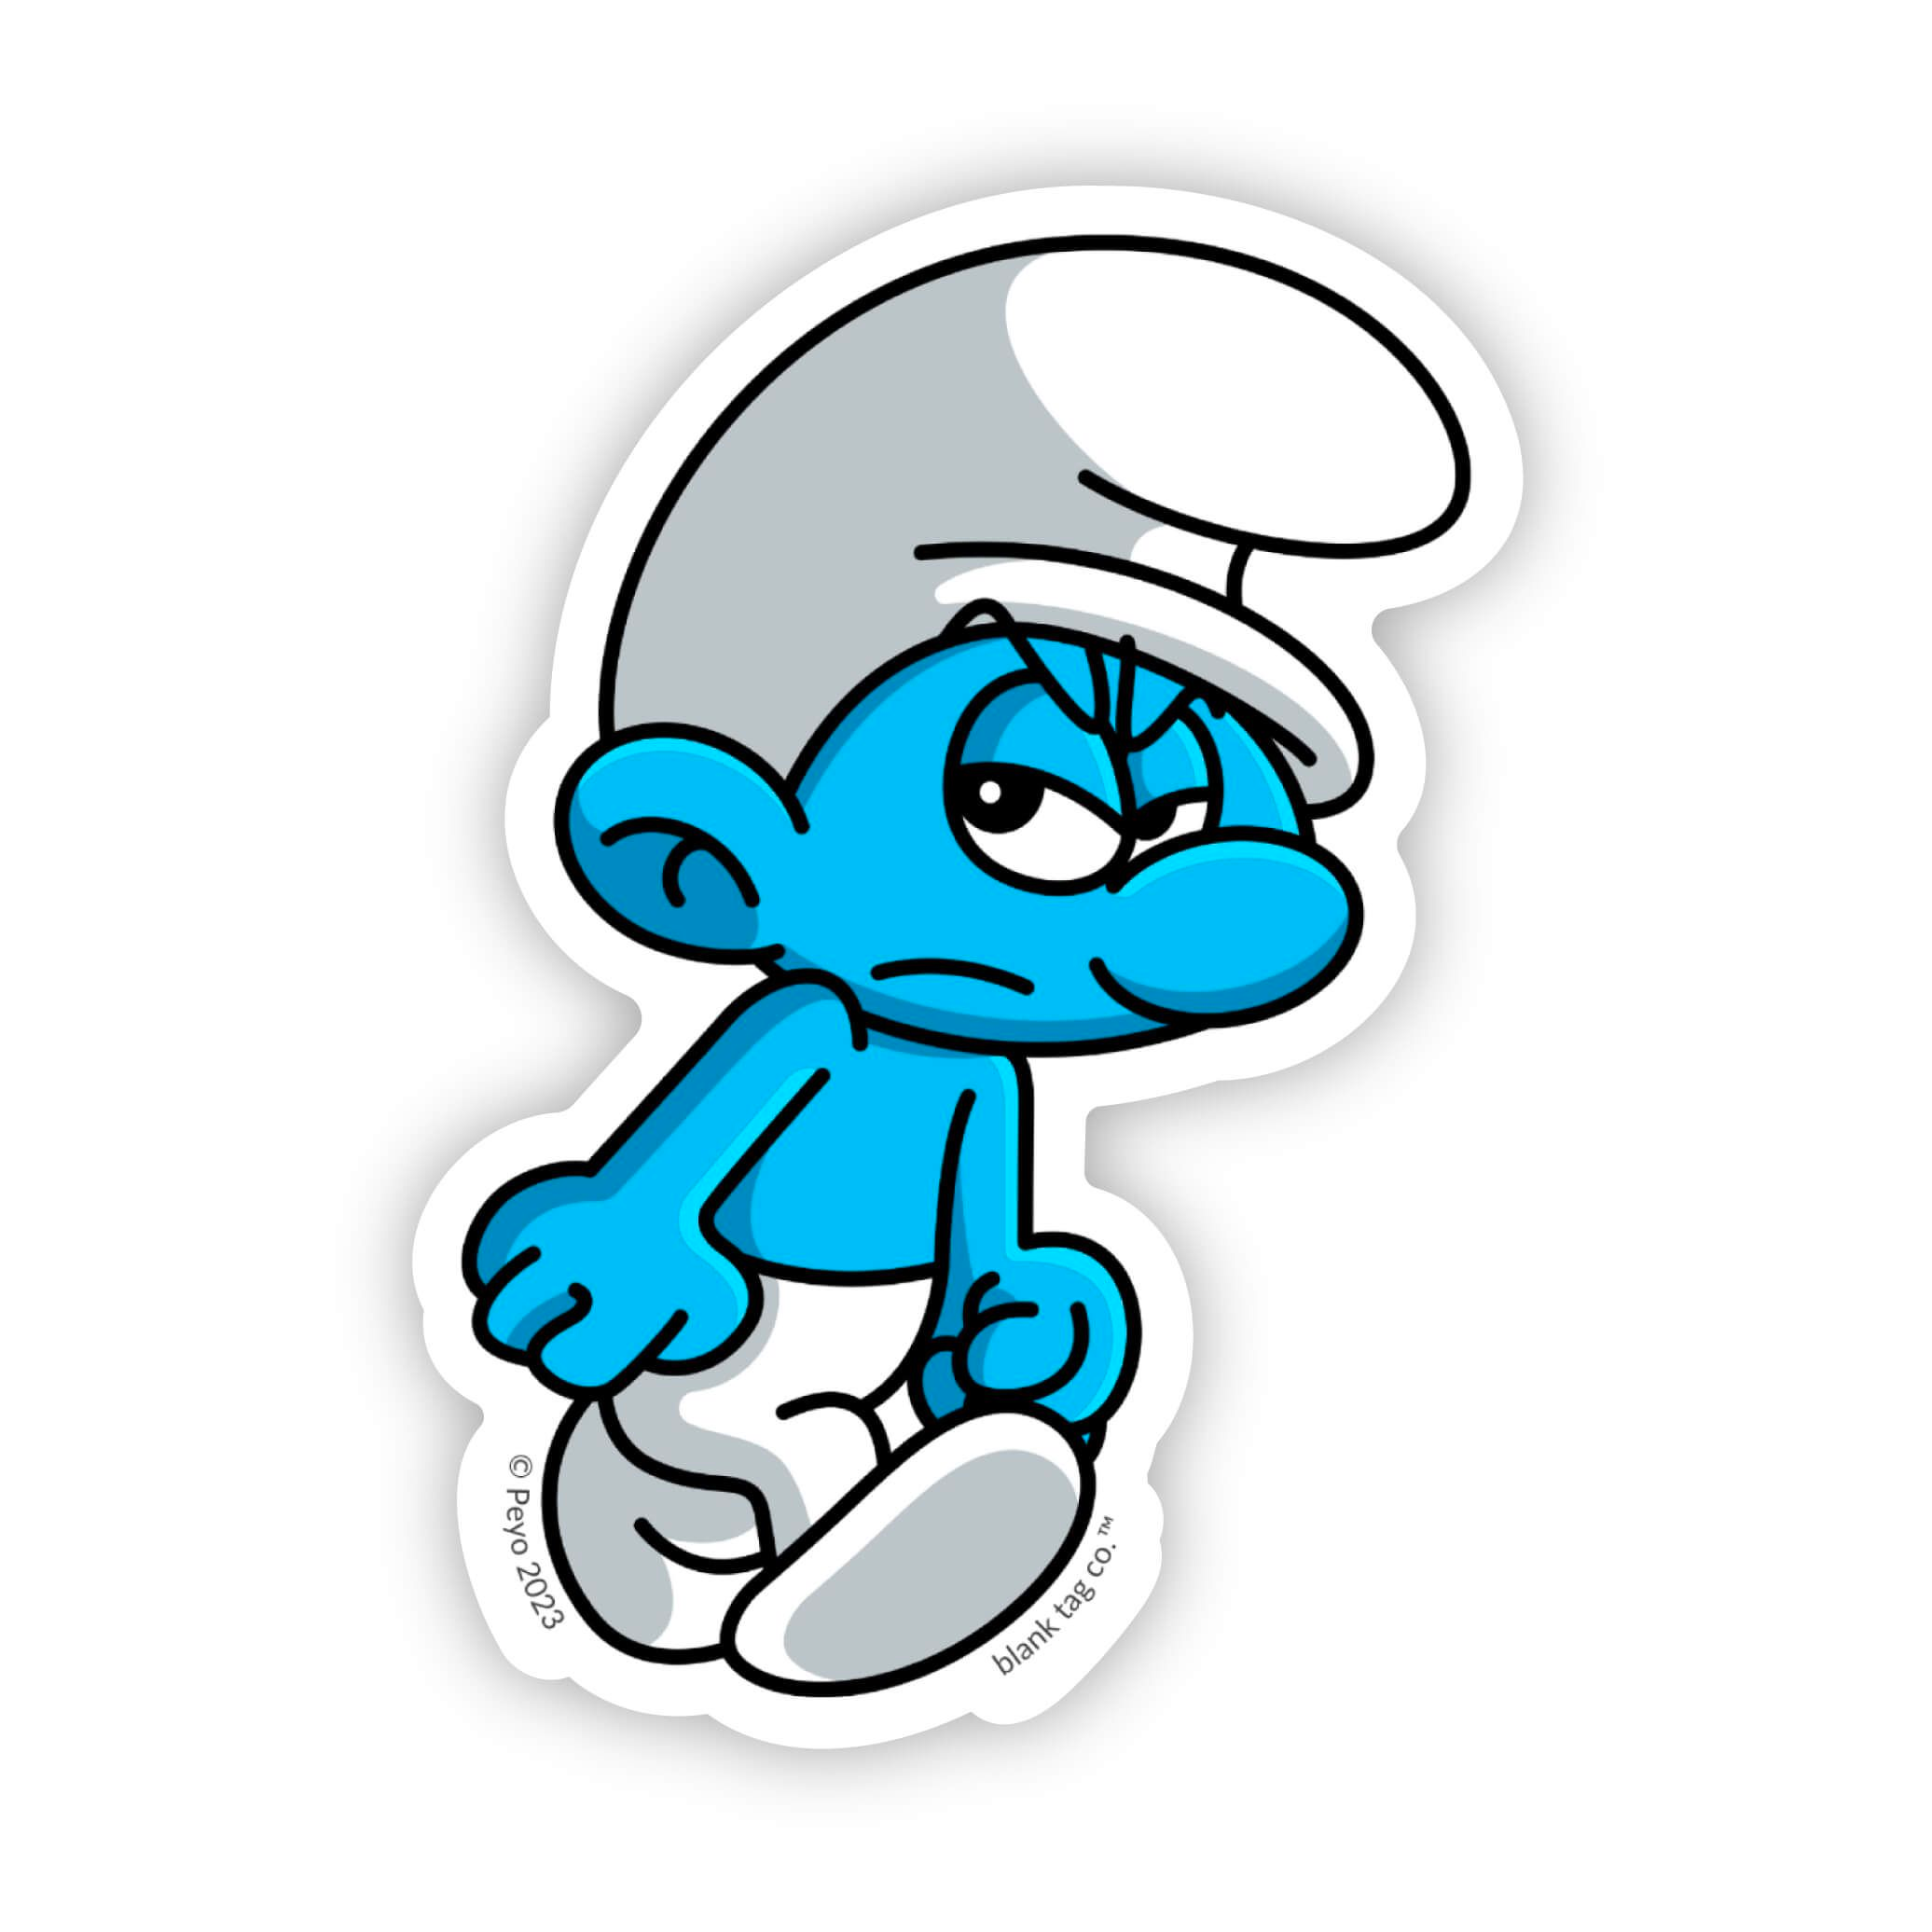 The Smurfs Sticker Bundle